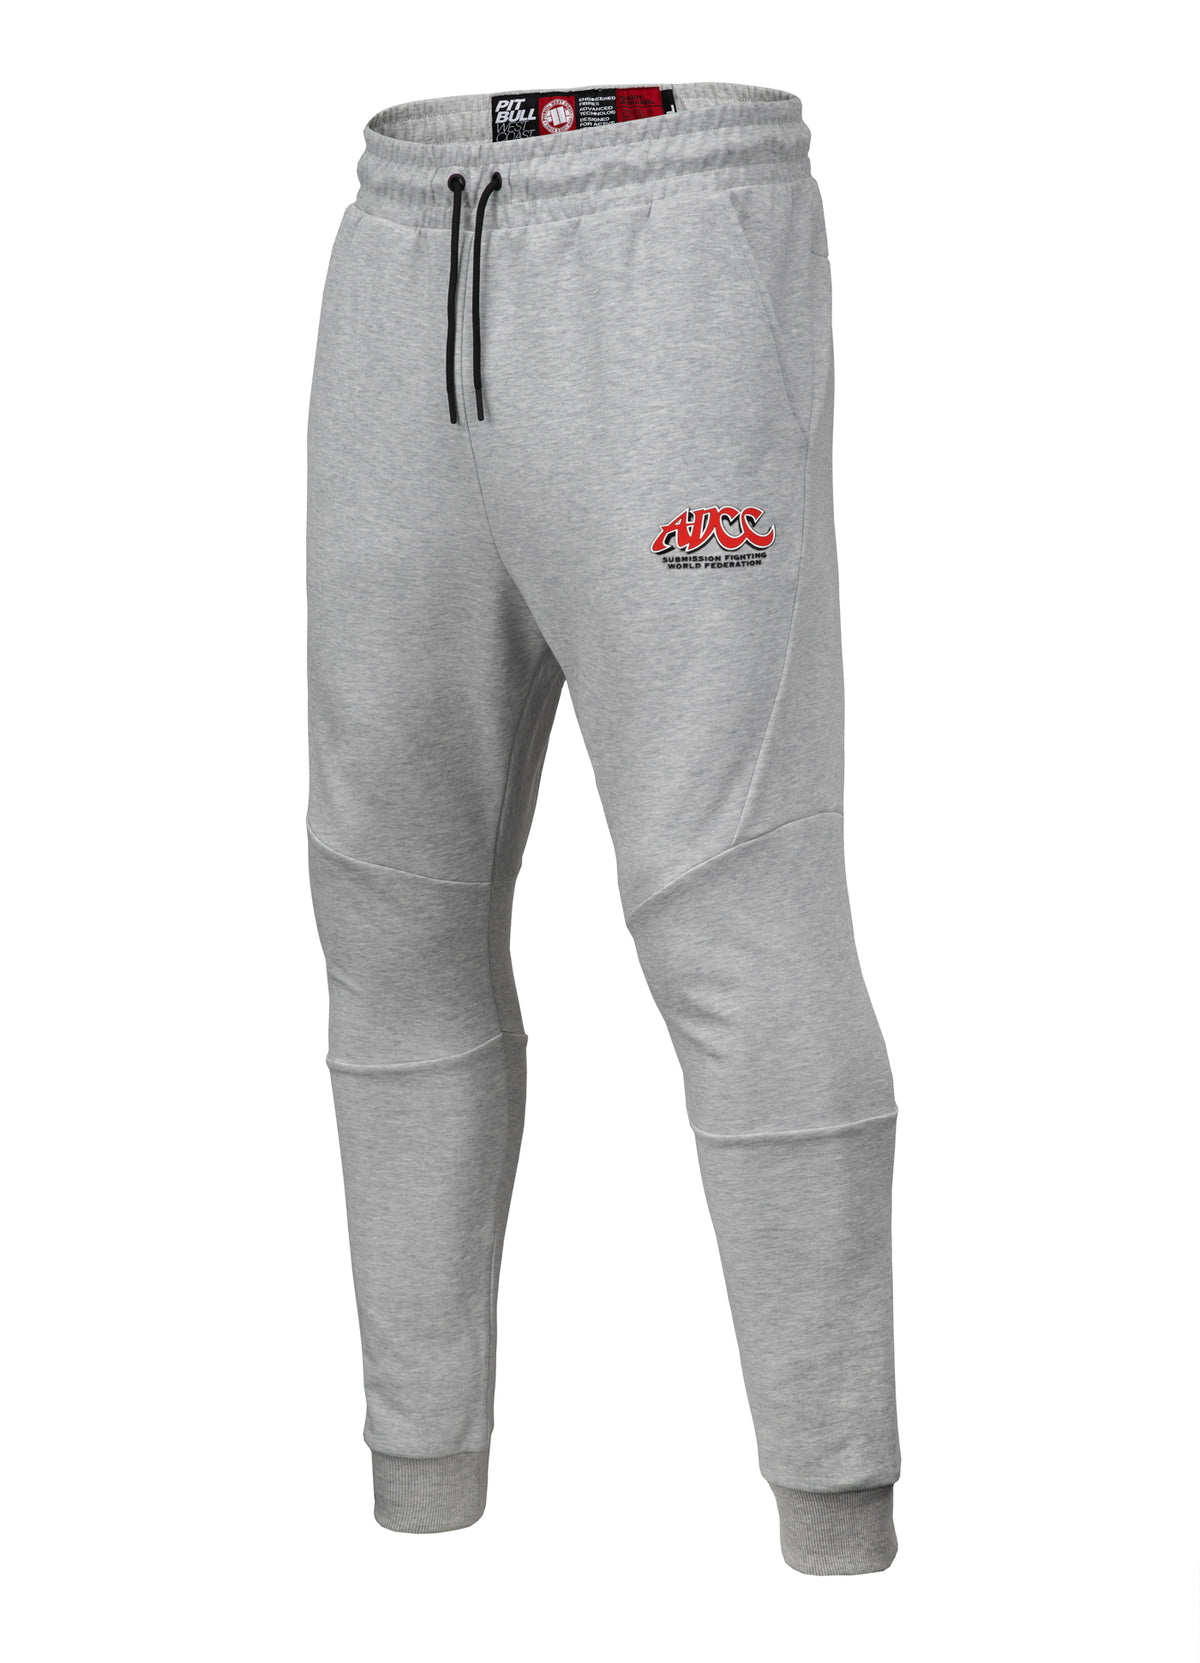 Joggers ADCC 2021 Grey - Pitbull West Coast International Store 